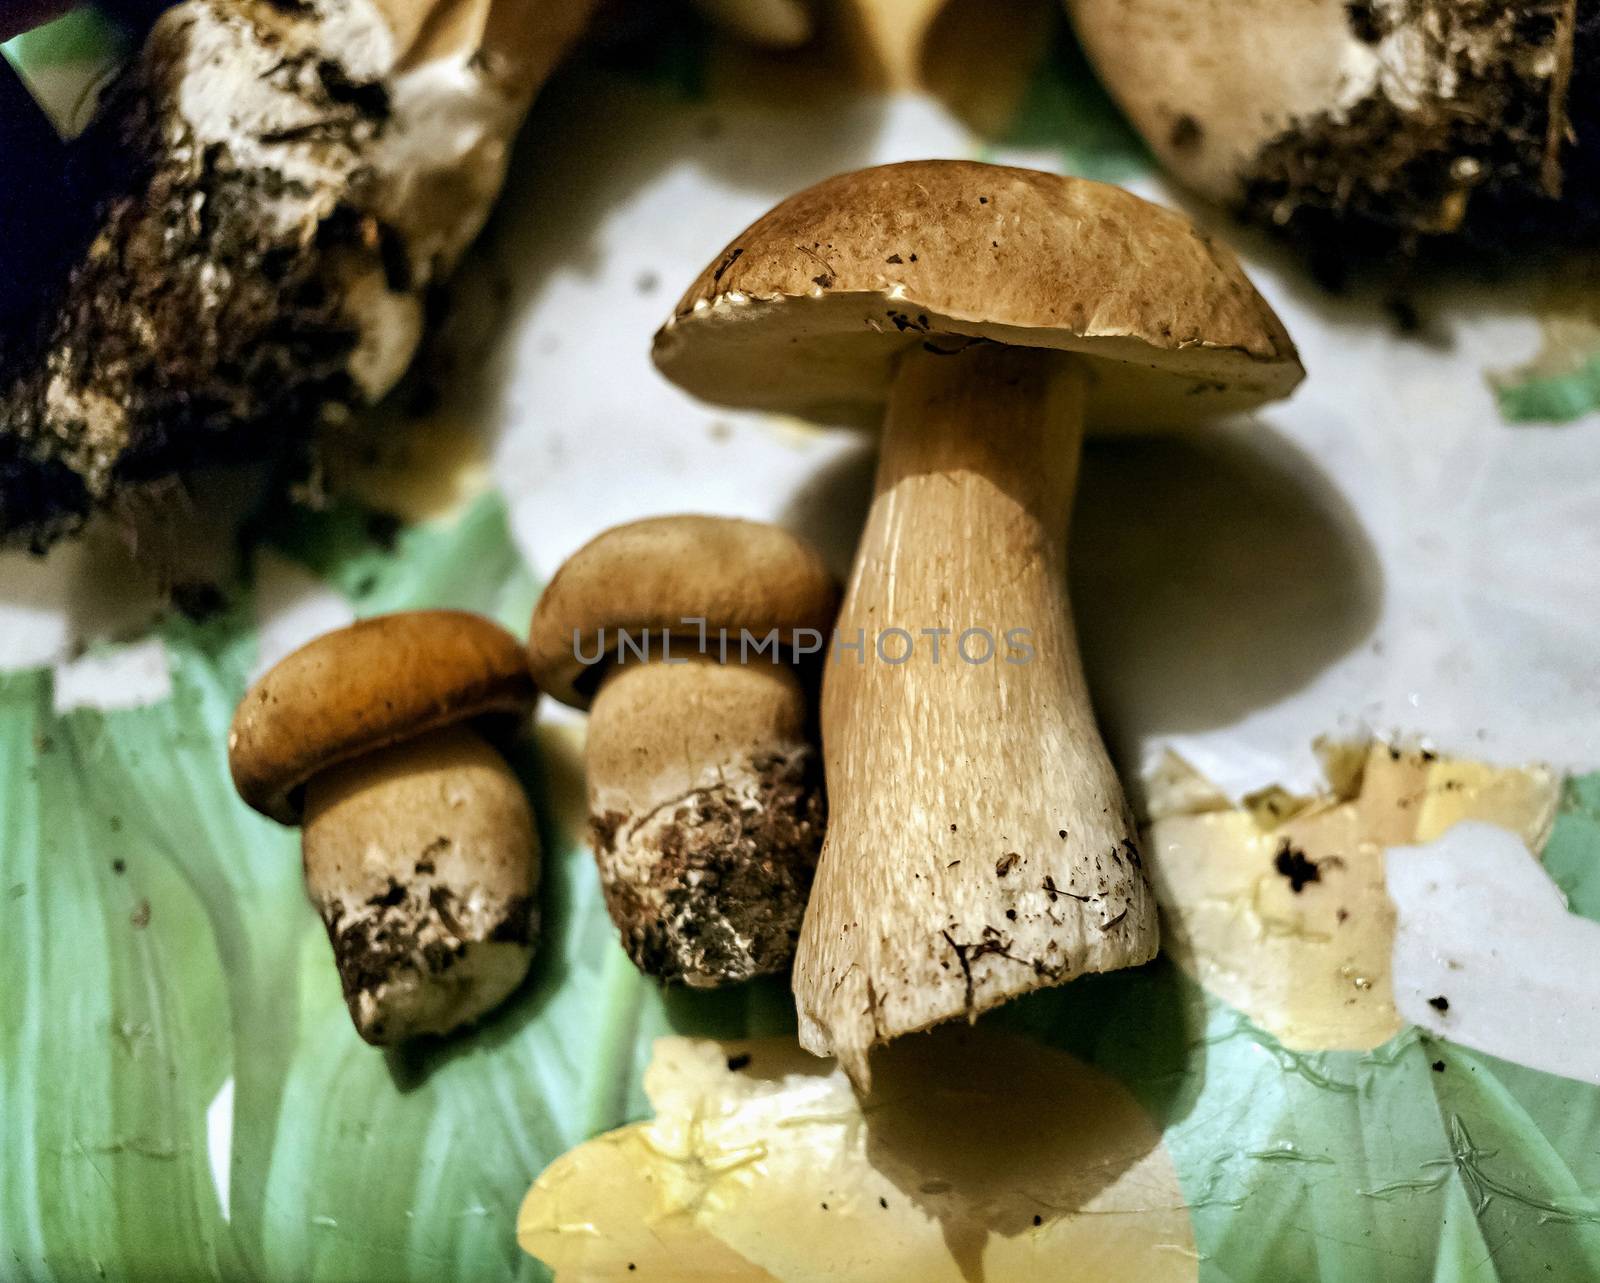 mushrooms with the Latin name Boletus edulis lie on the table